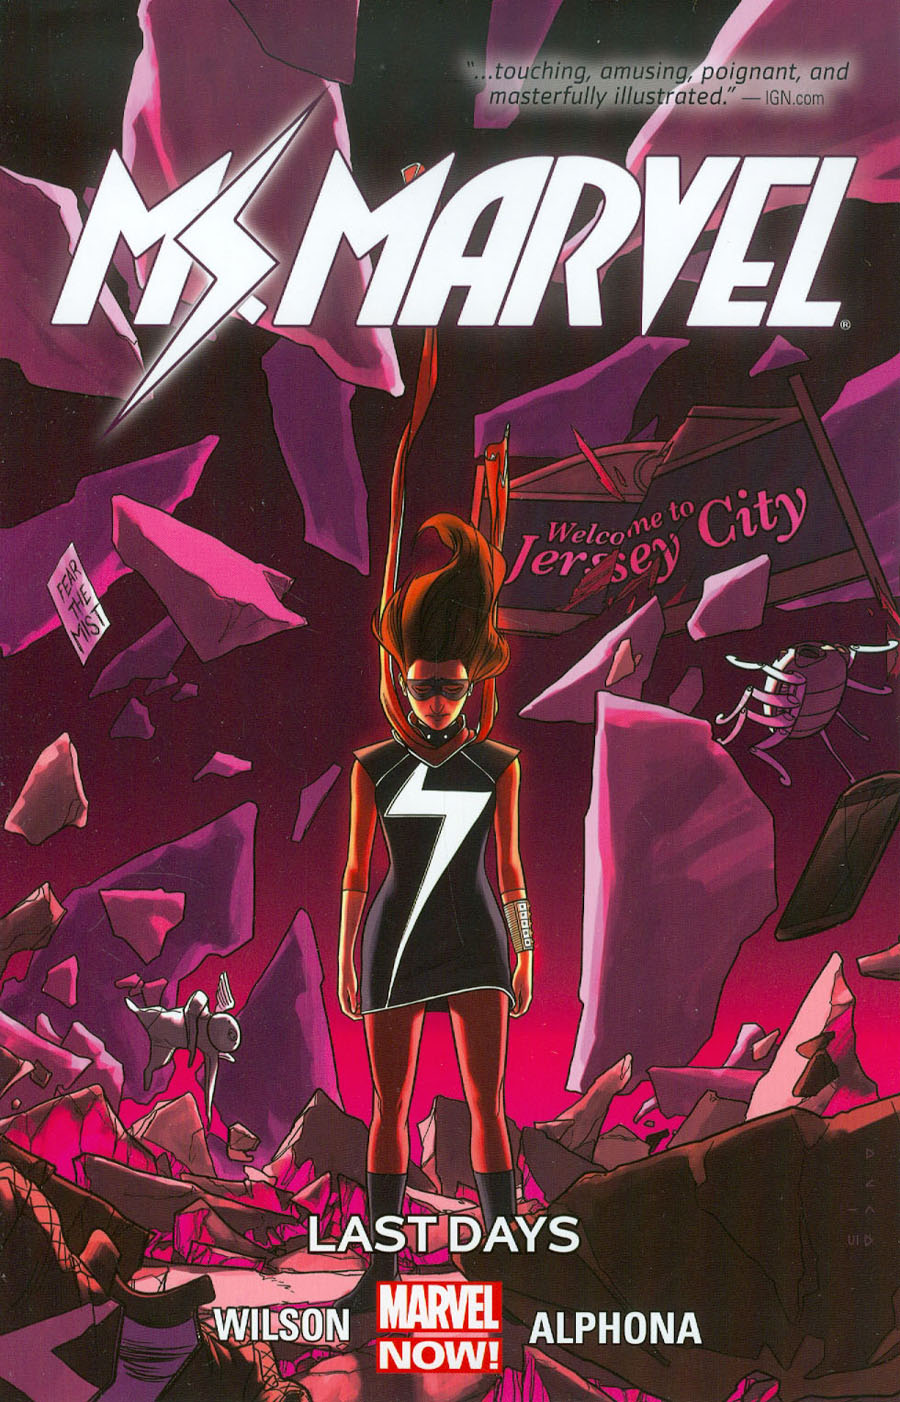 Ms Marvel (2014) Vol 4 Last Days TP